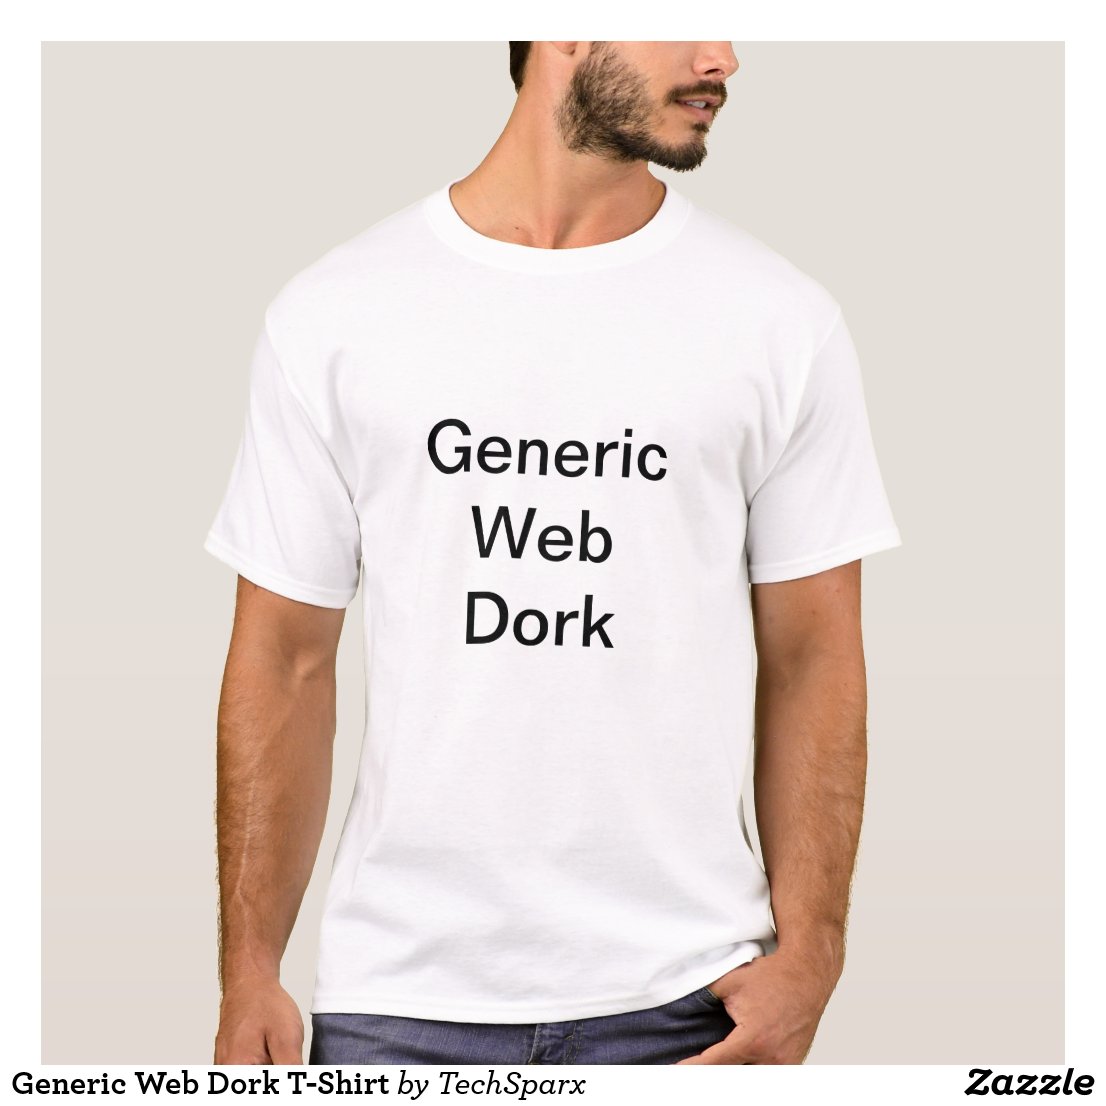 Buy Generic Web Dork T-Shirt